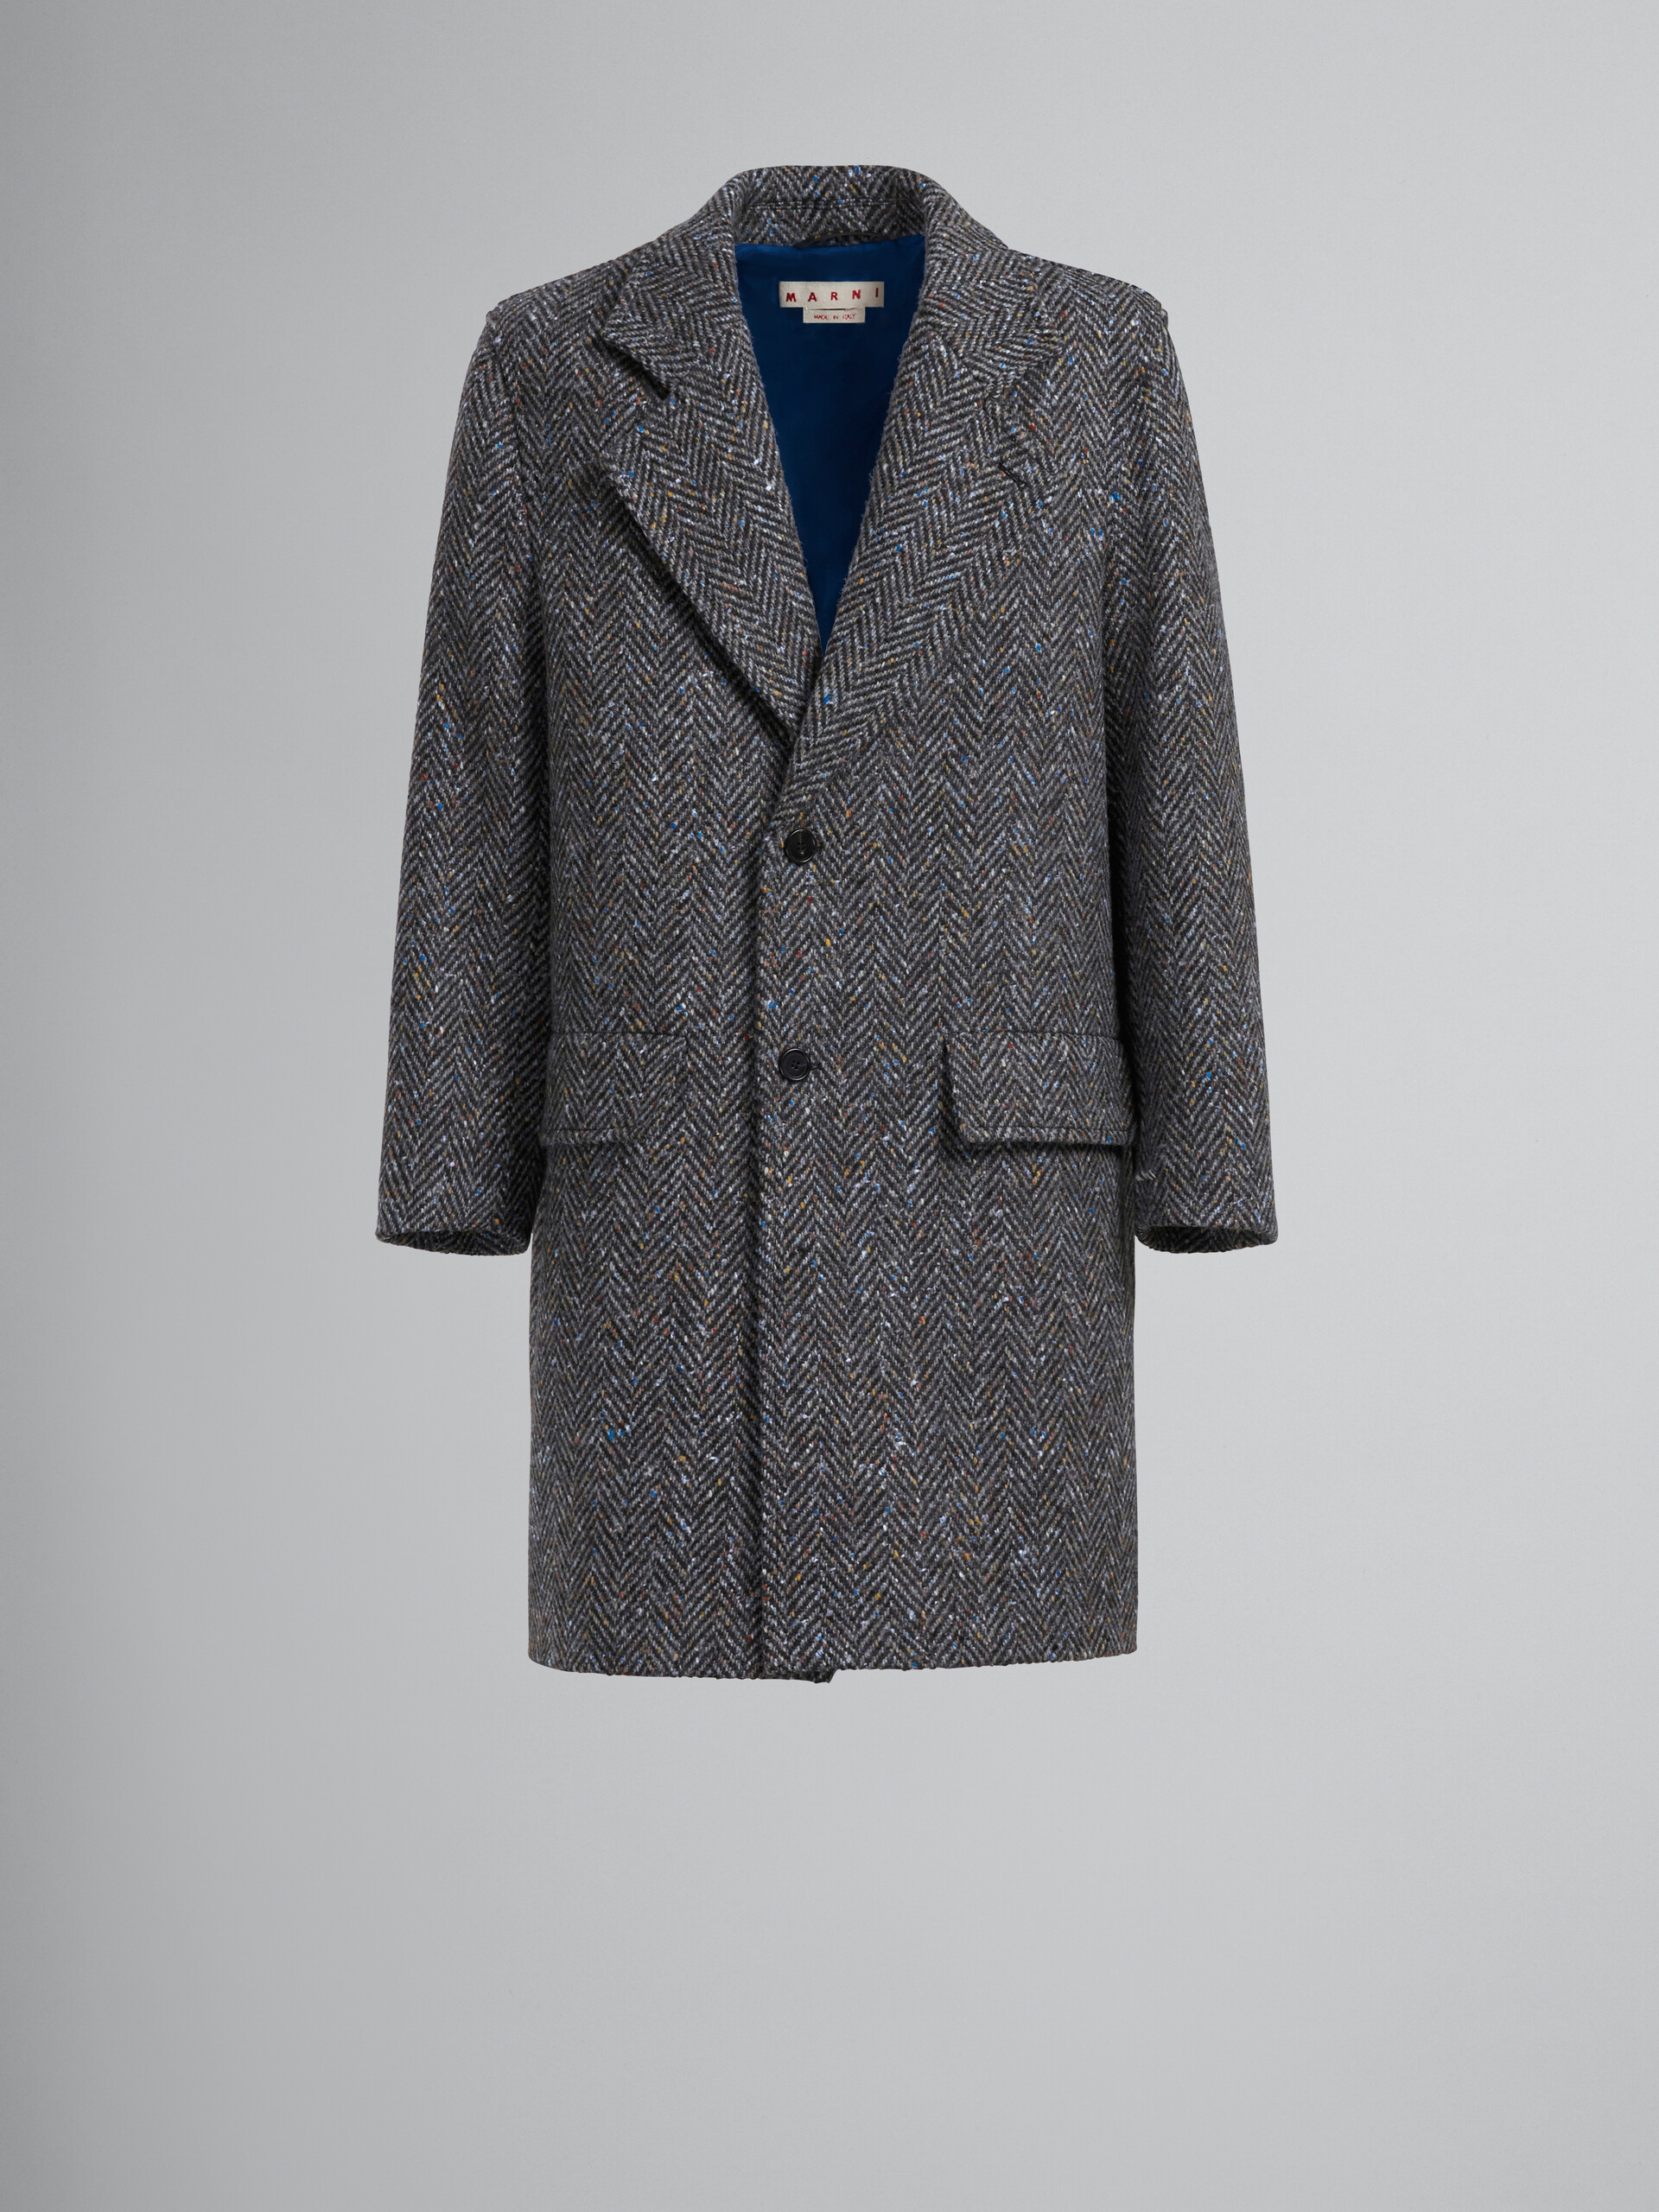 Grey chevron wool coat - Coat - Image 1